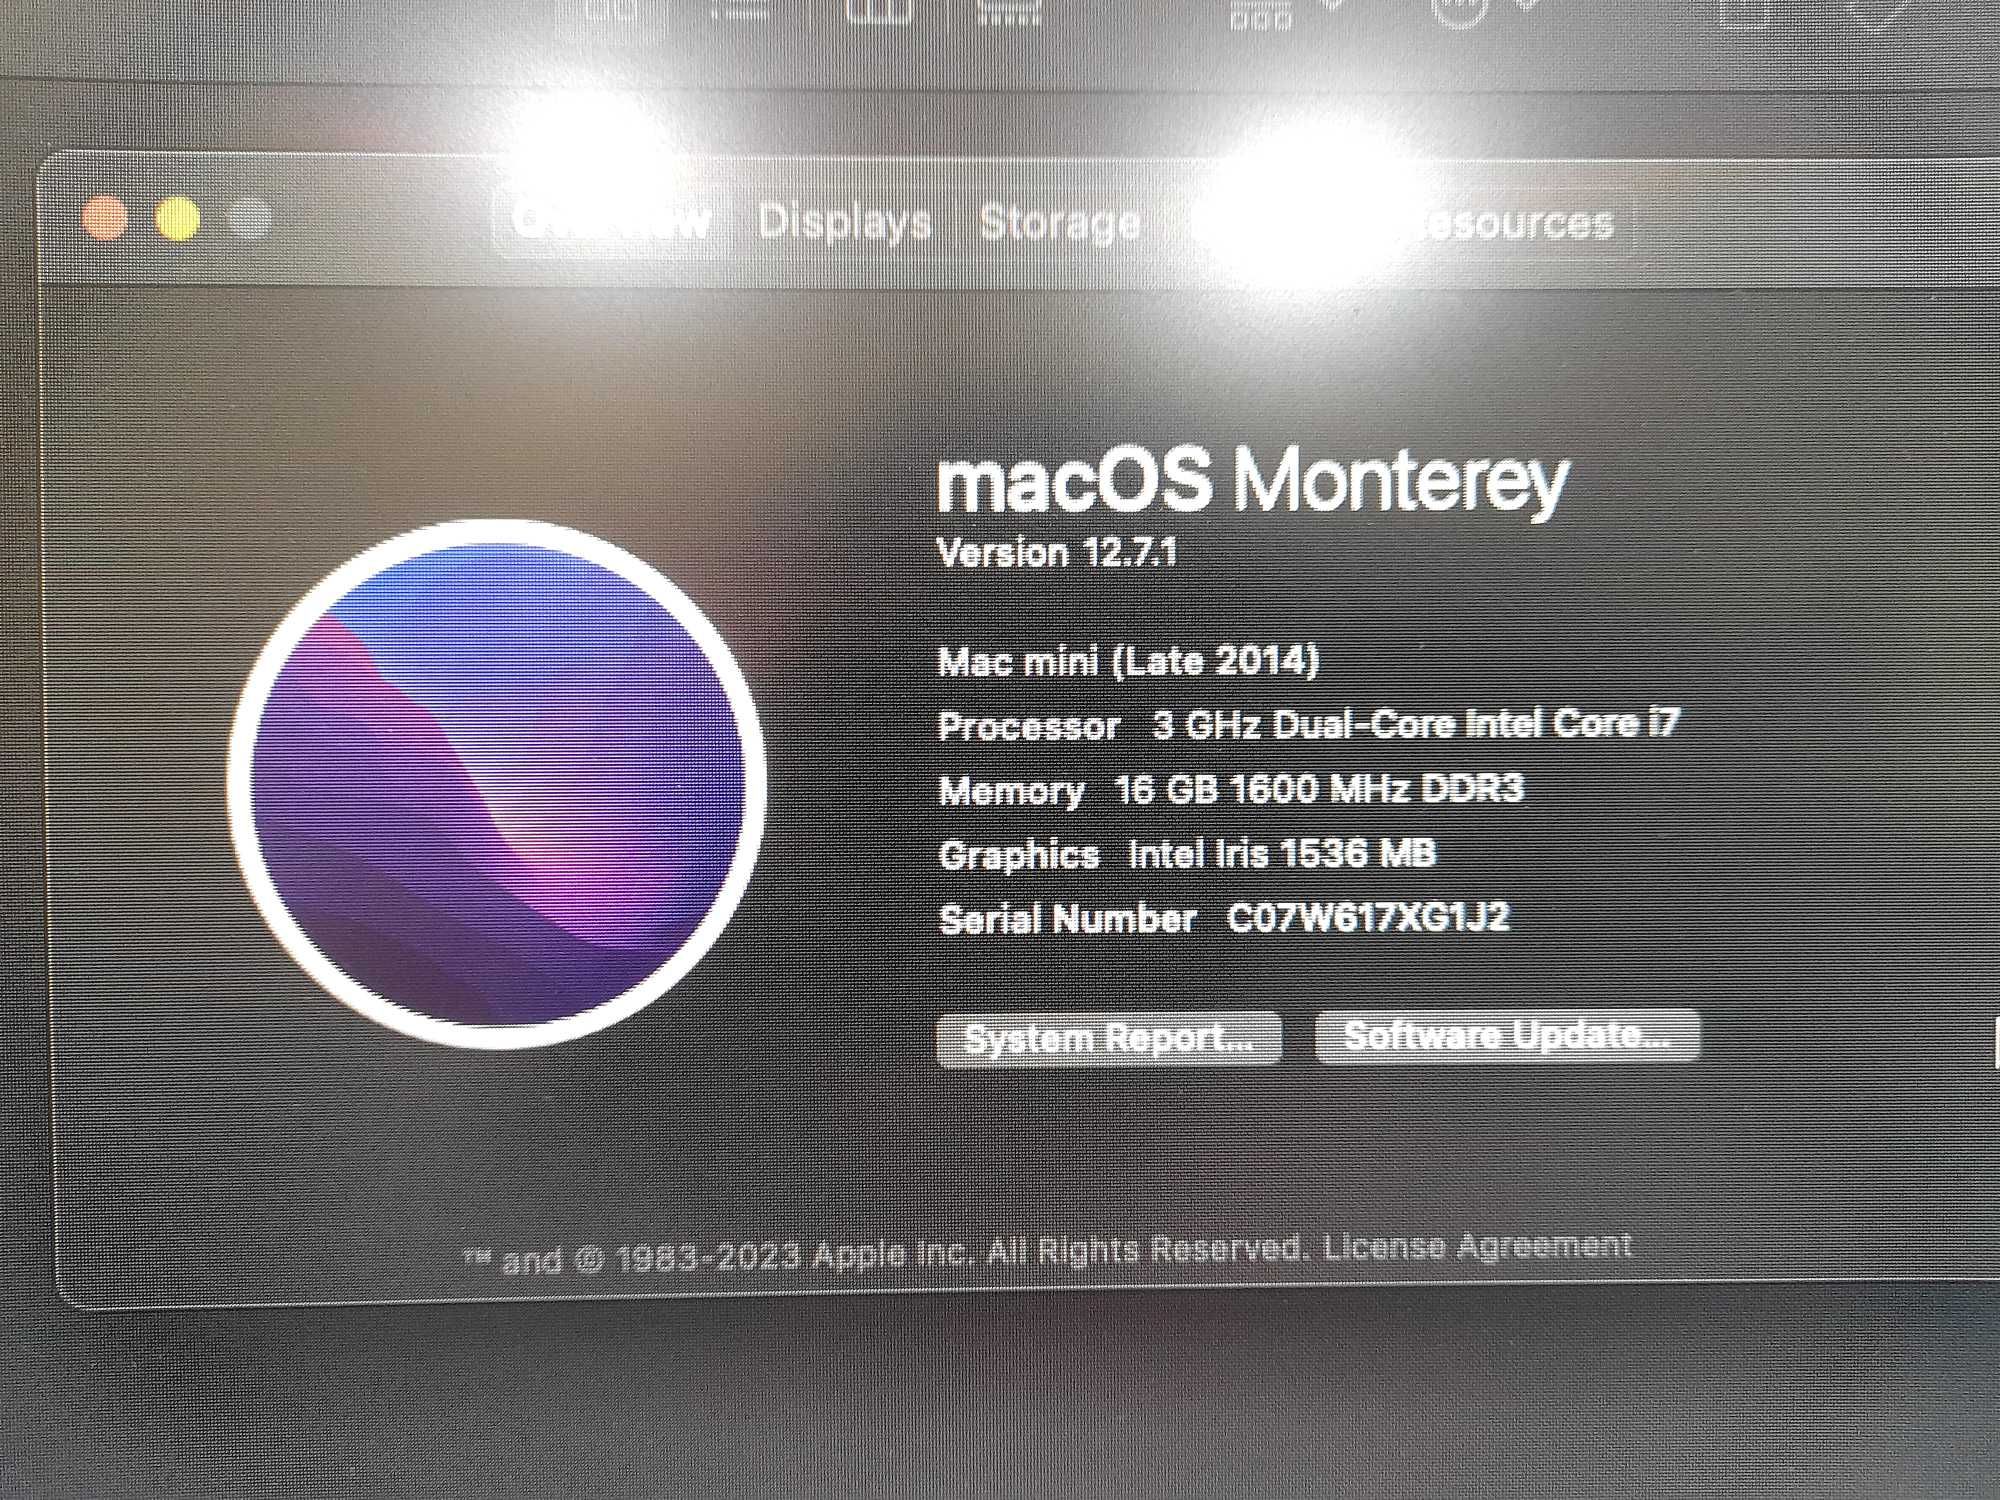 Mac mini. macOS 16 ram, Core i7